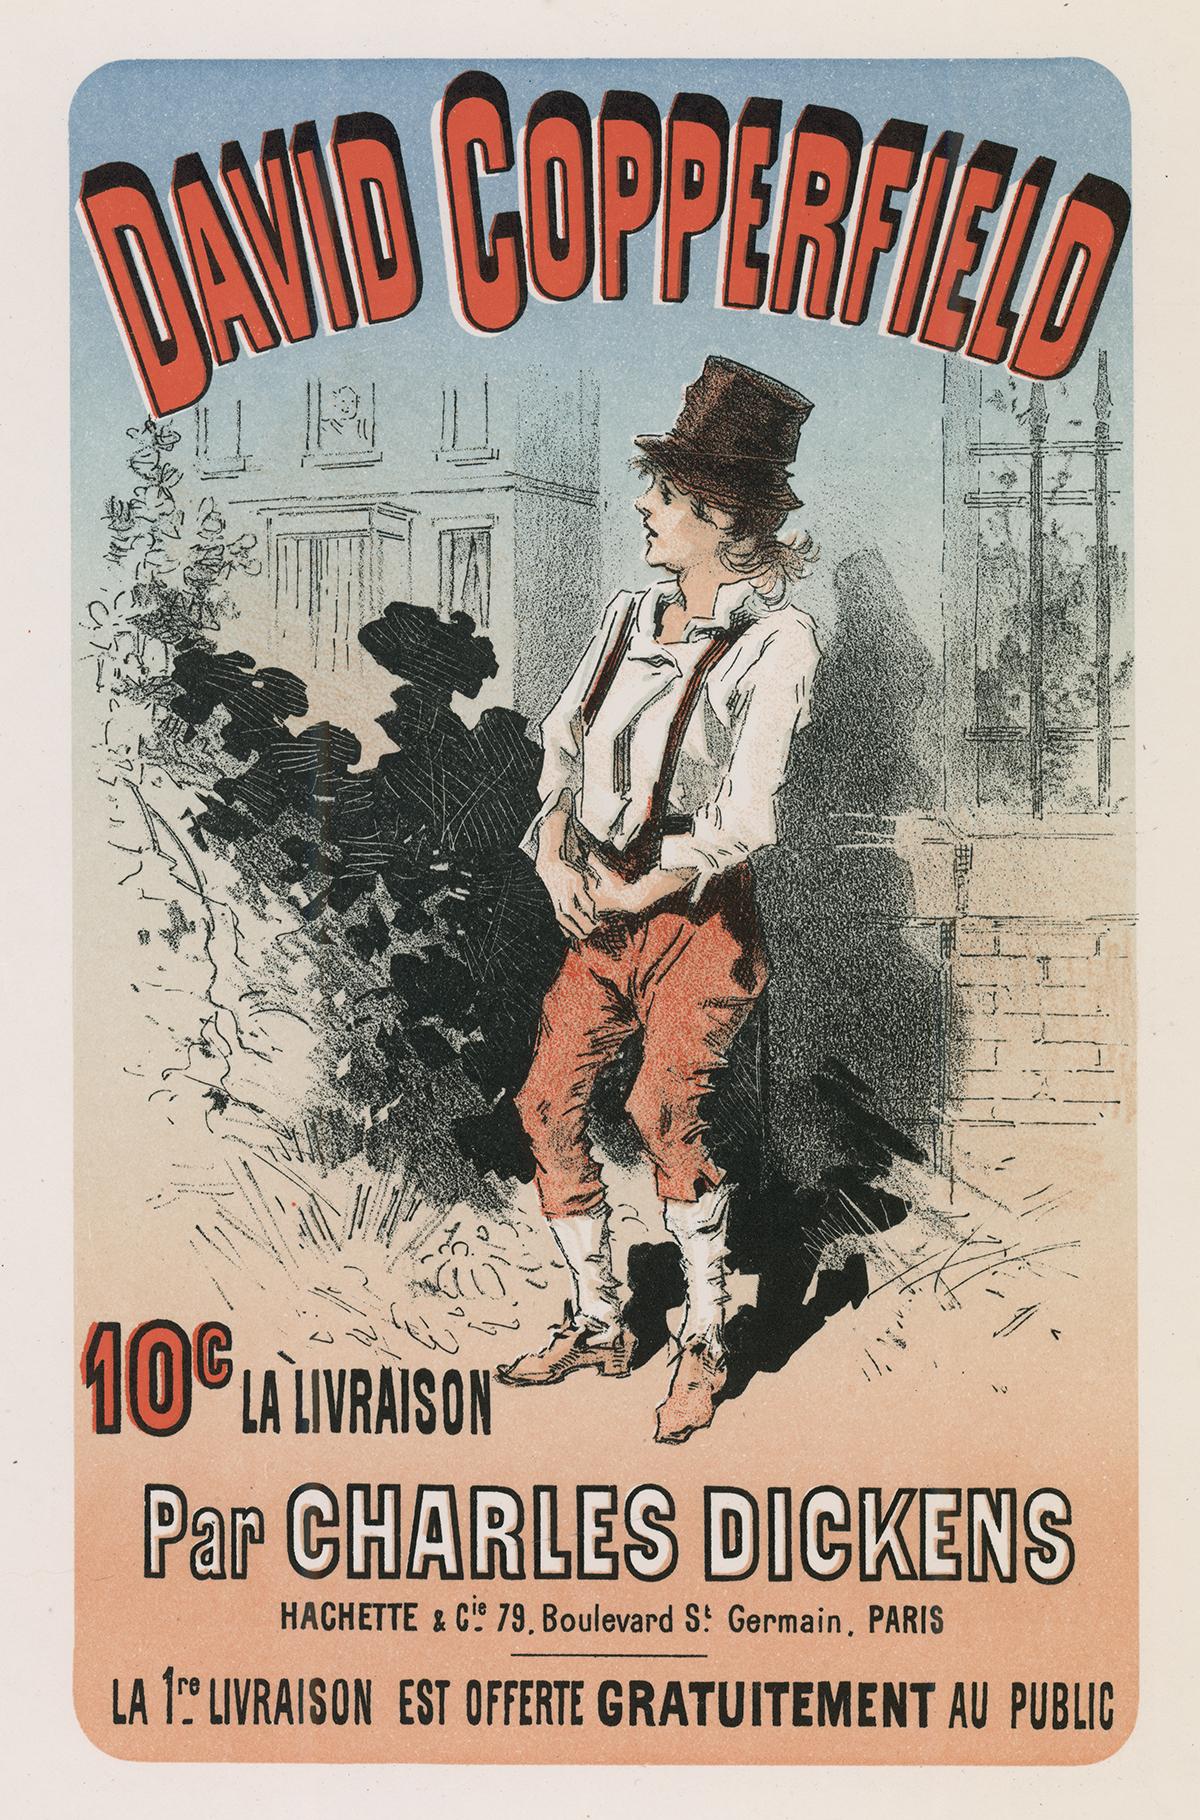 David Copperfield Par Charles Dickens by Jules Chéret, Japon lithograph, 1886